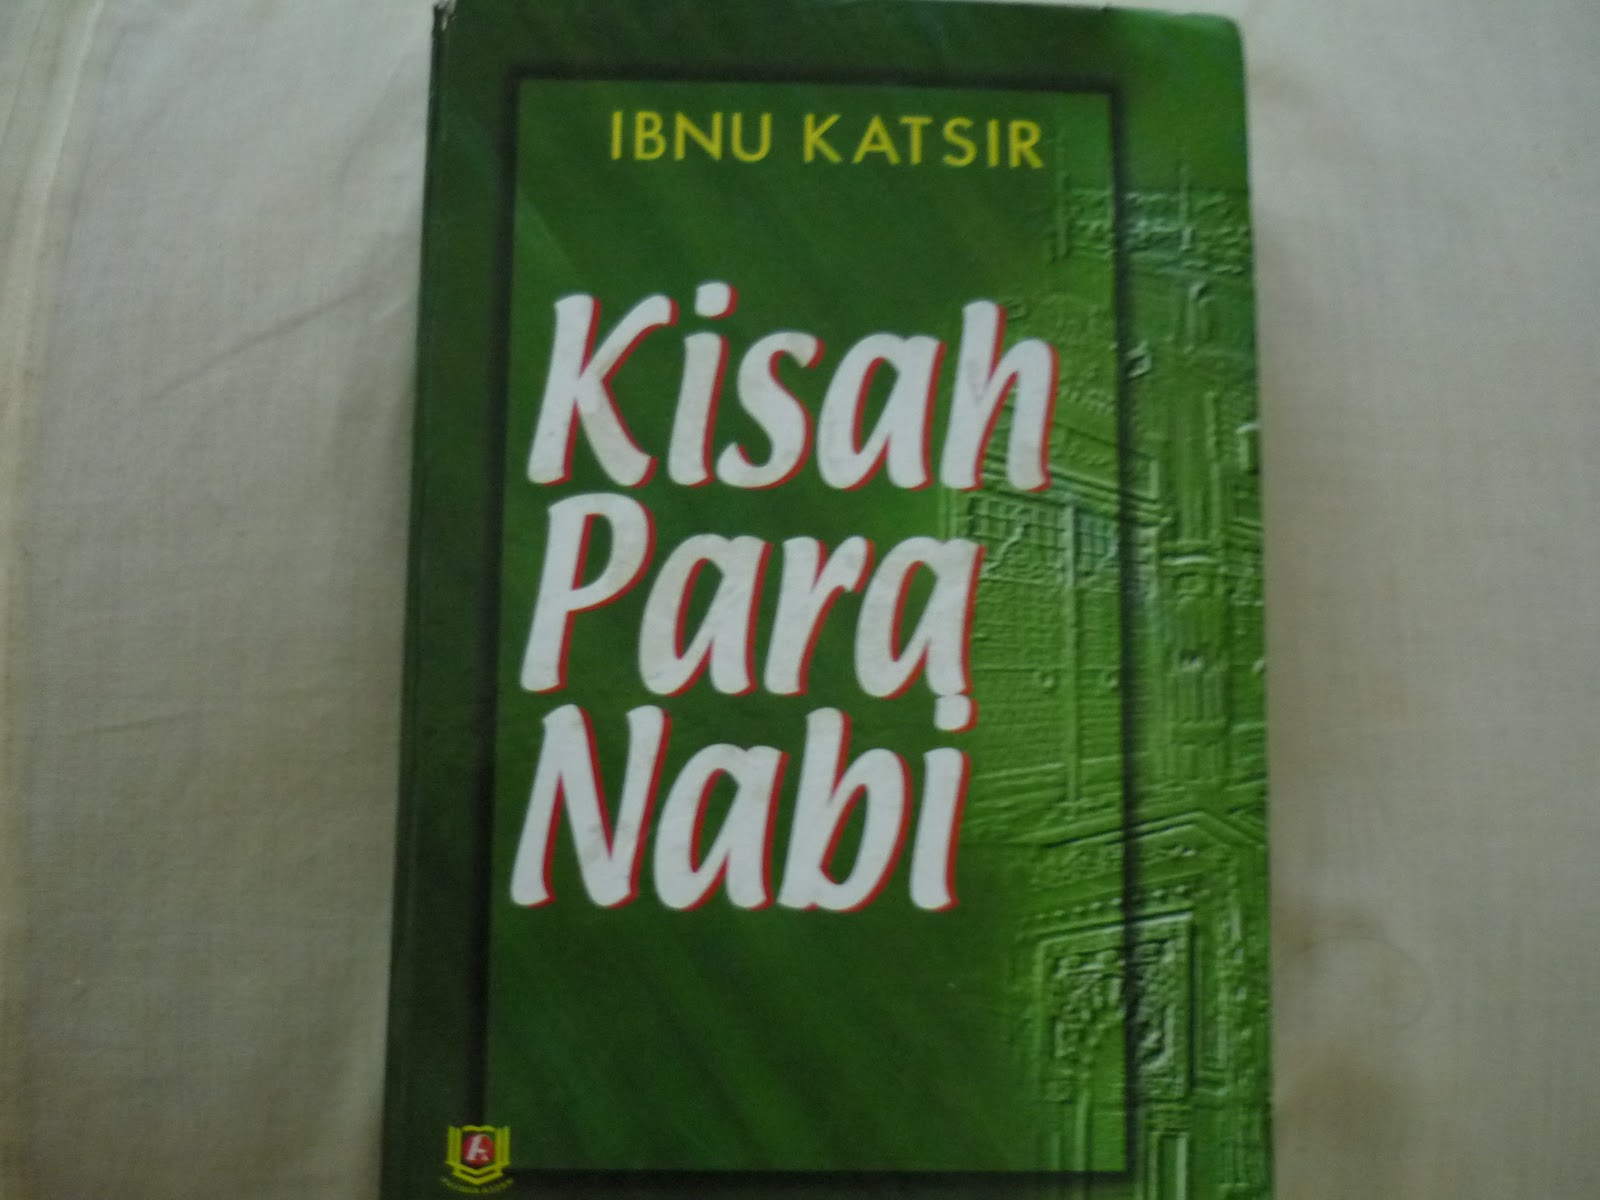 BUKU ISLAM POPULAR: Buku Agama Popular Dalam Bahasa Melayu 